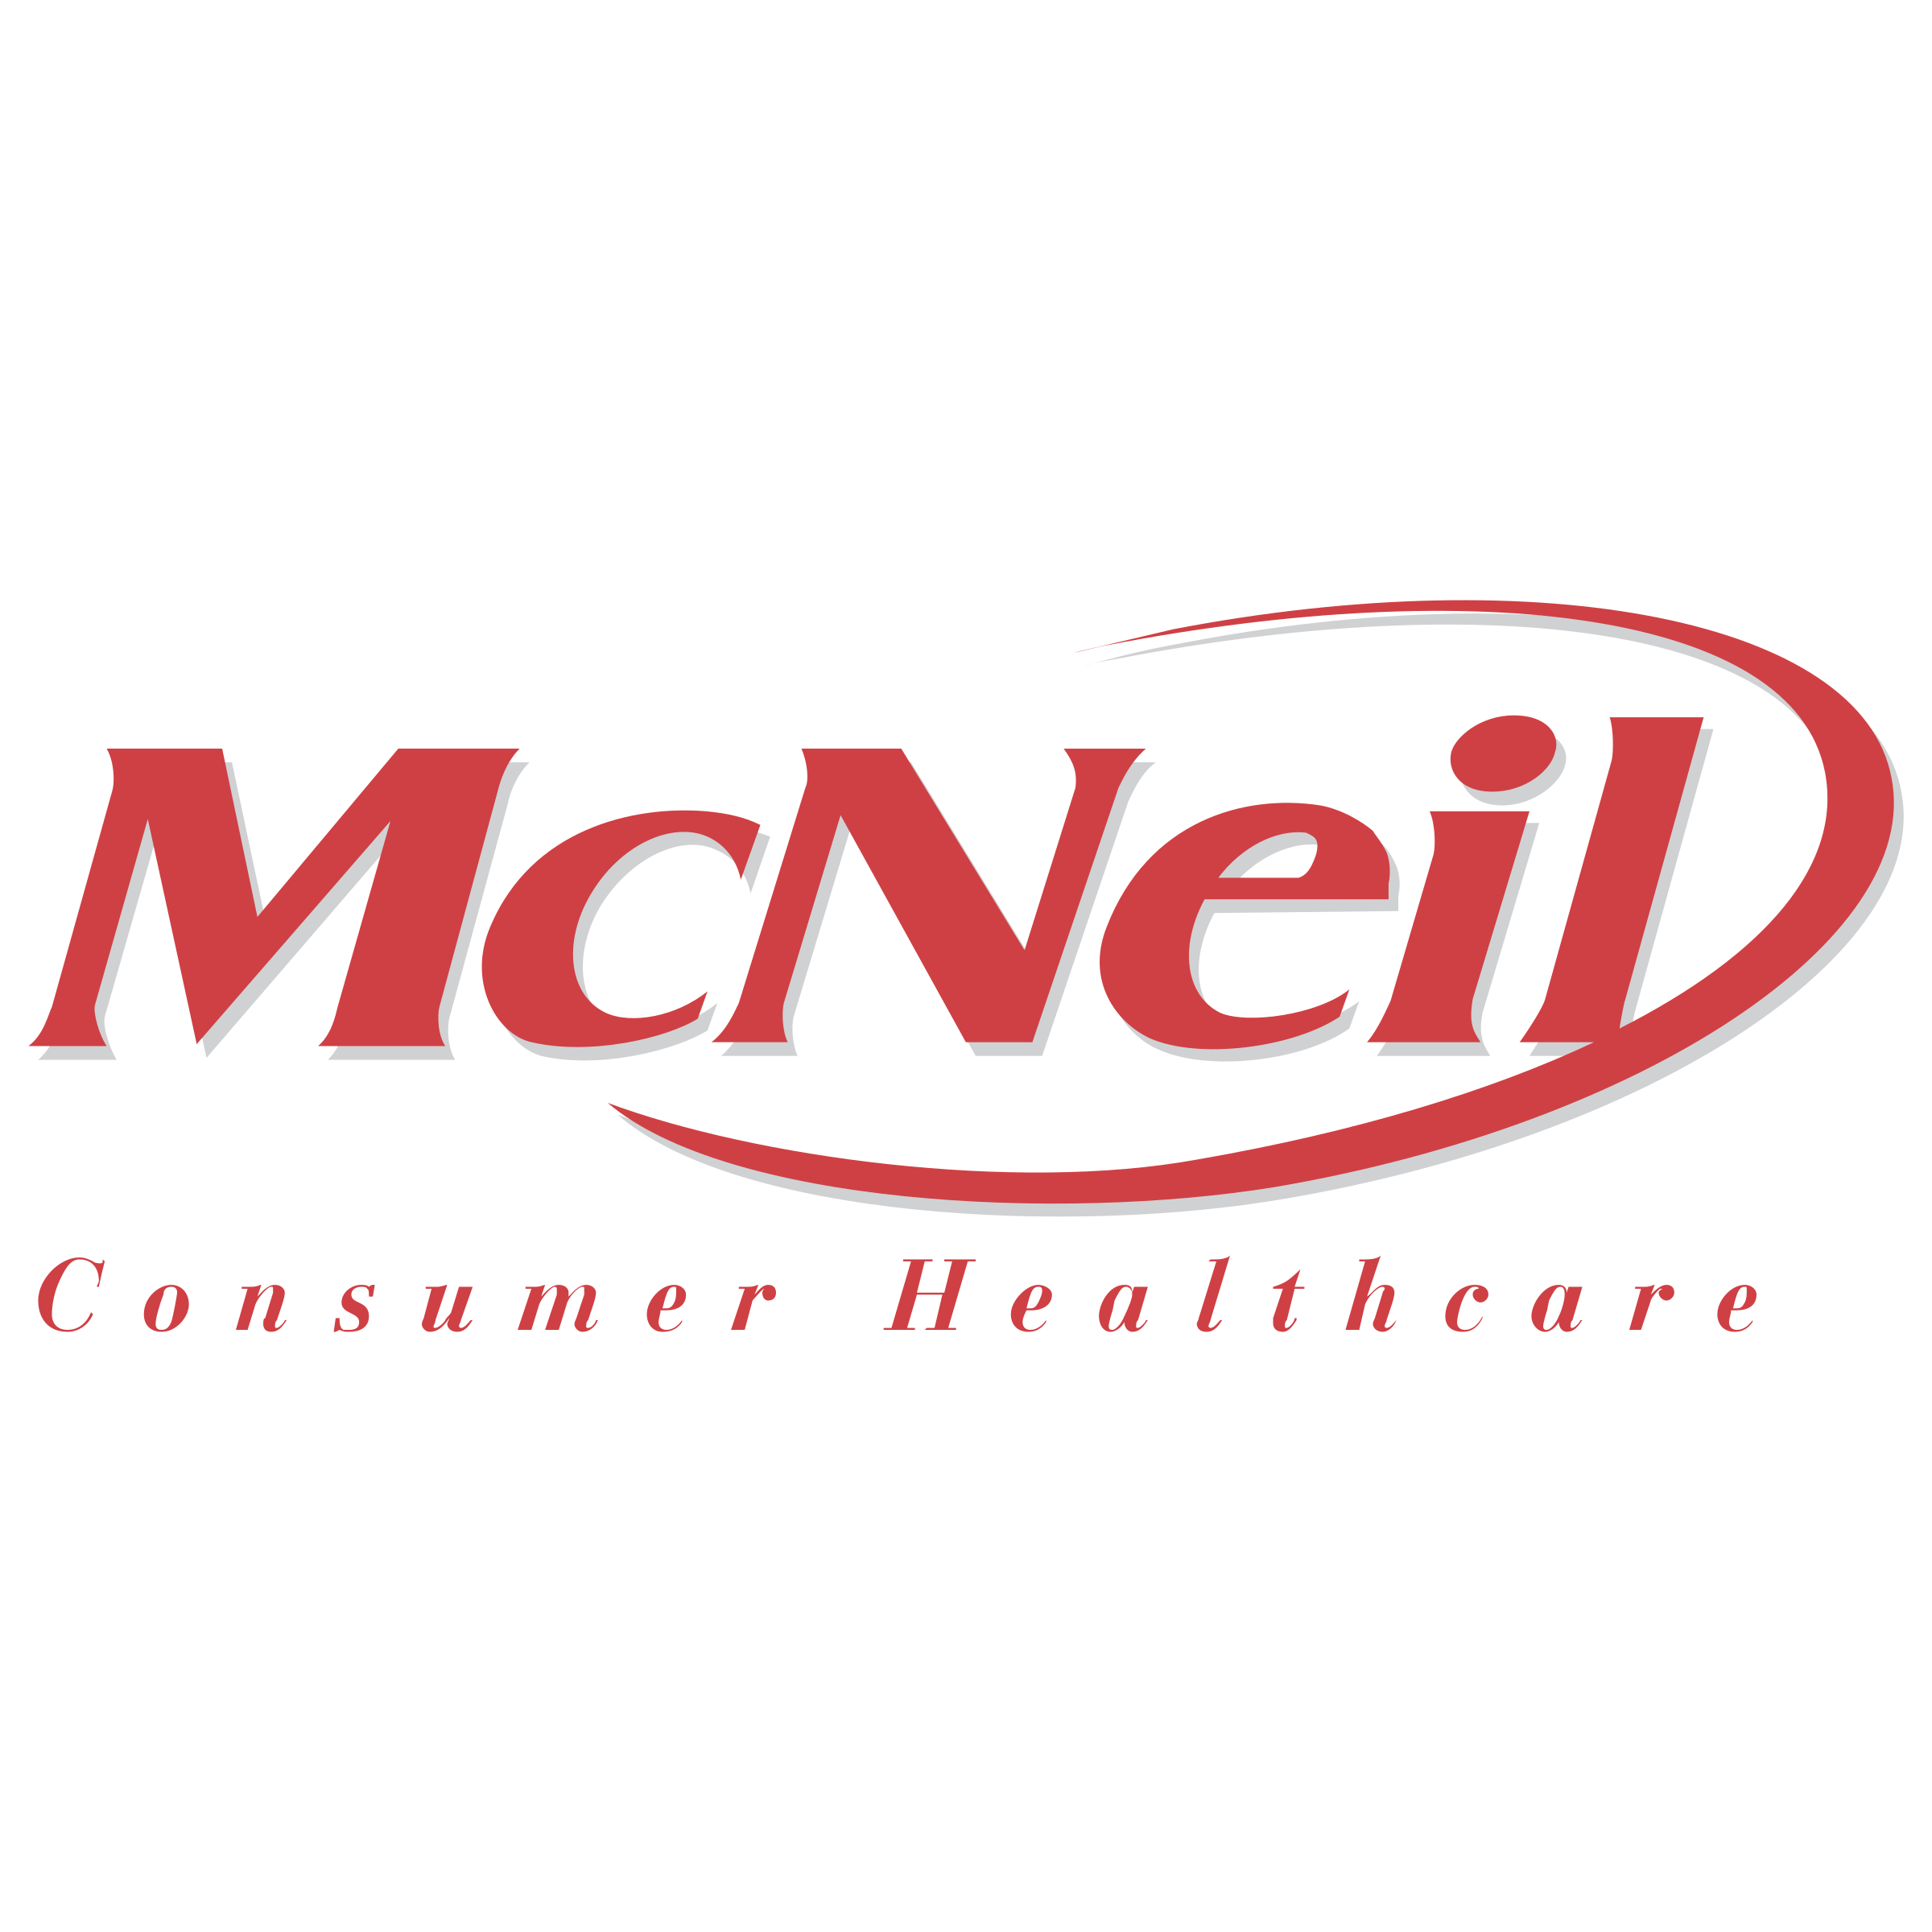 McNeil Logo - McNeil Logo PNG Transparent & SVG Vector - Freebie Supply